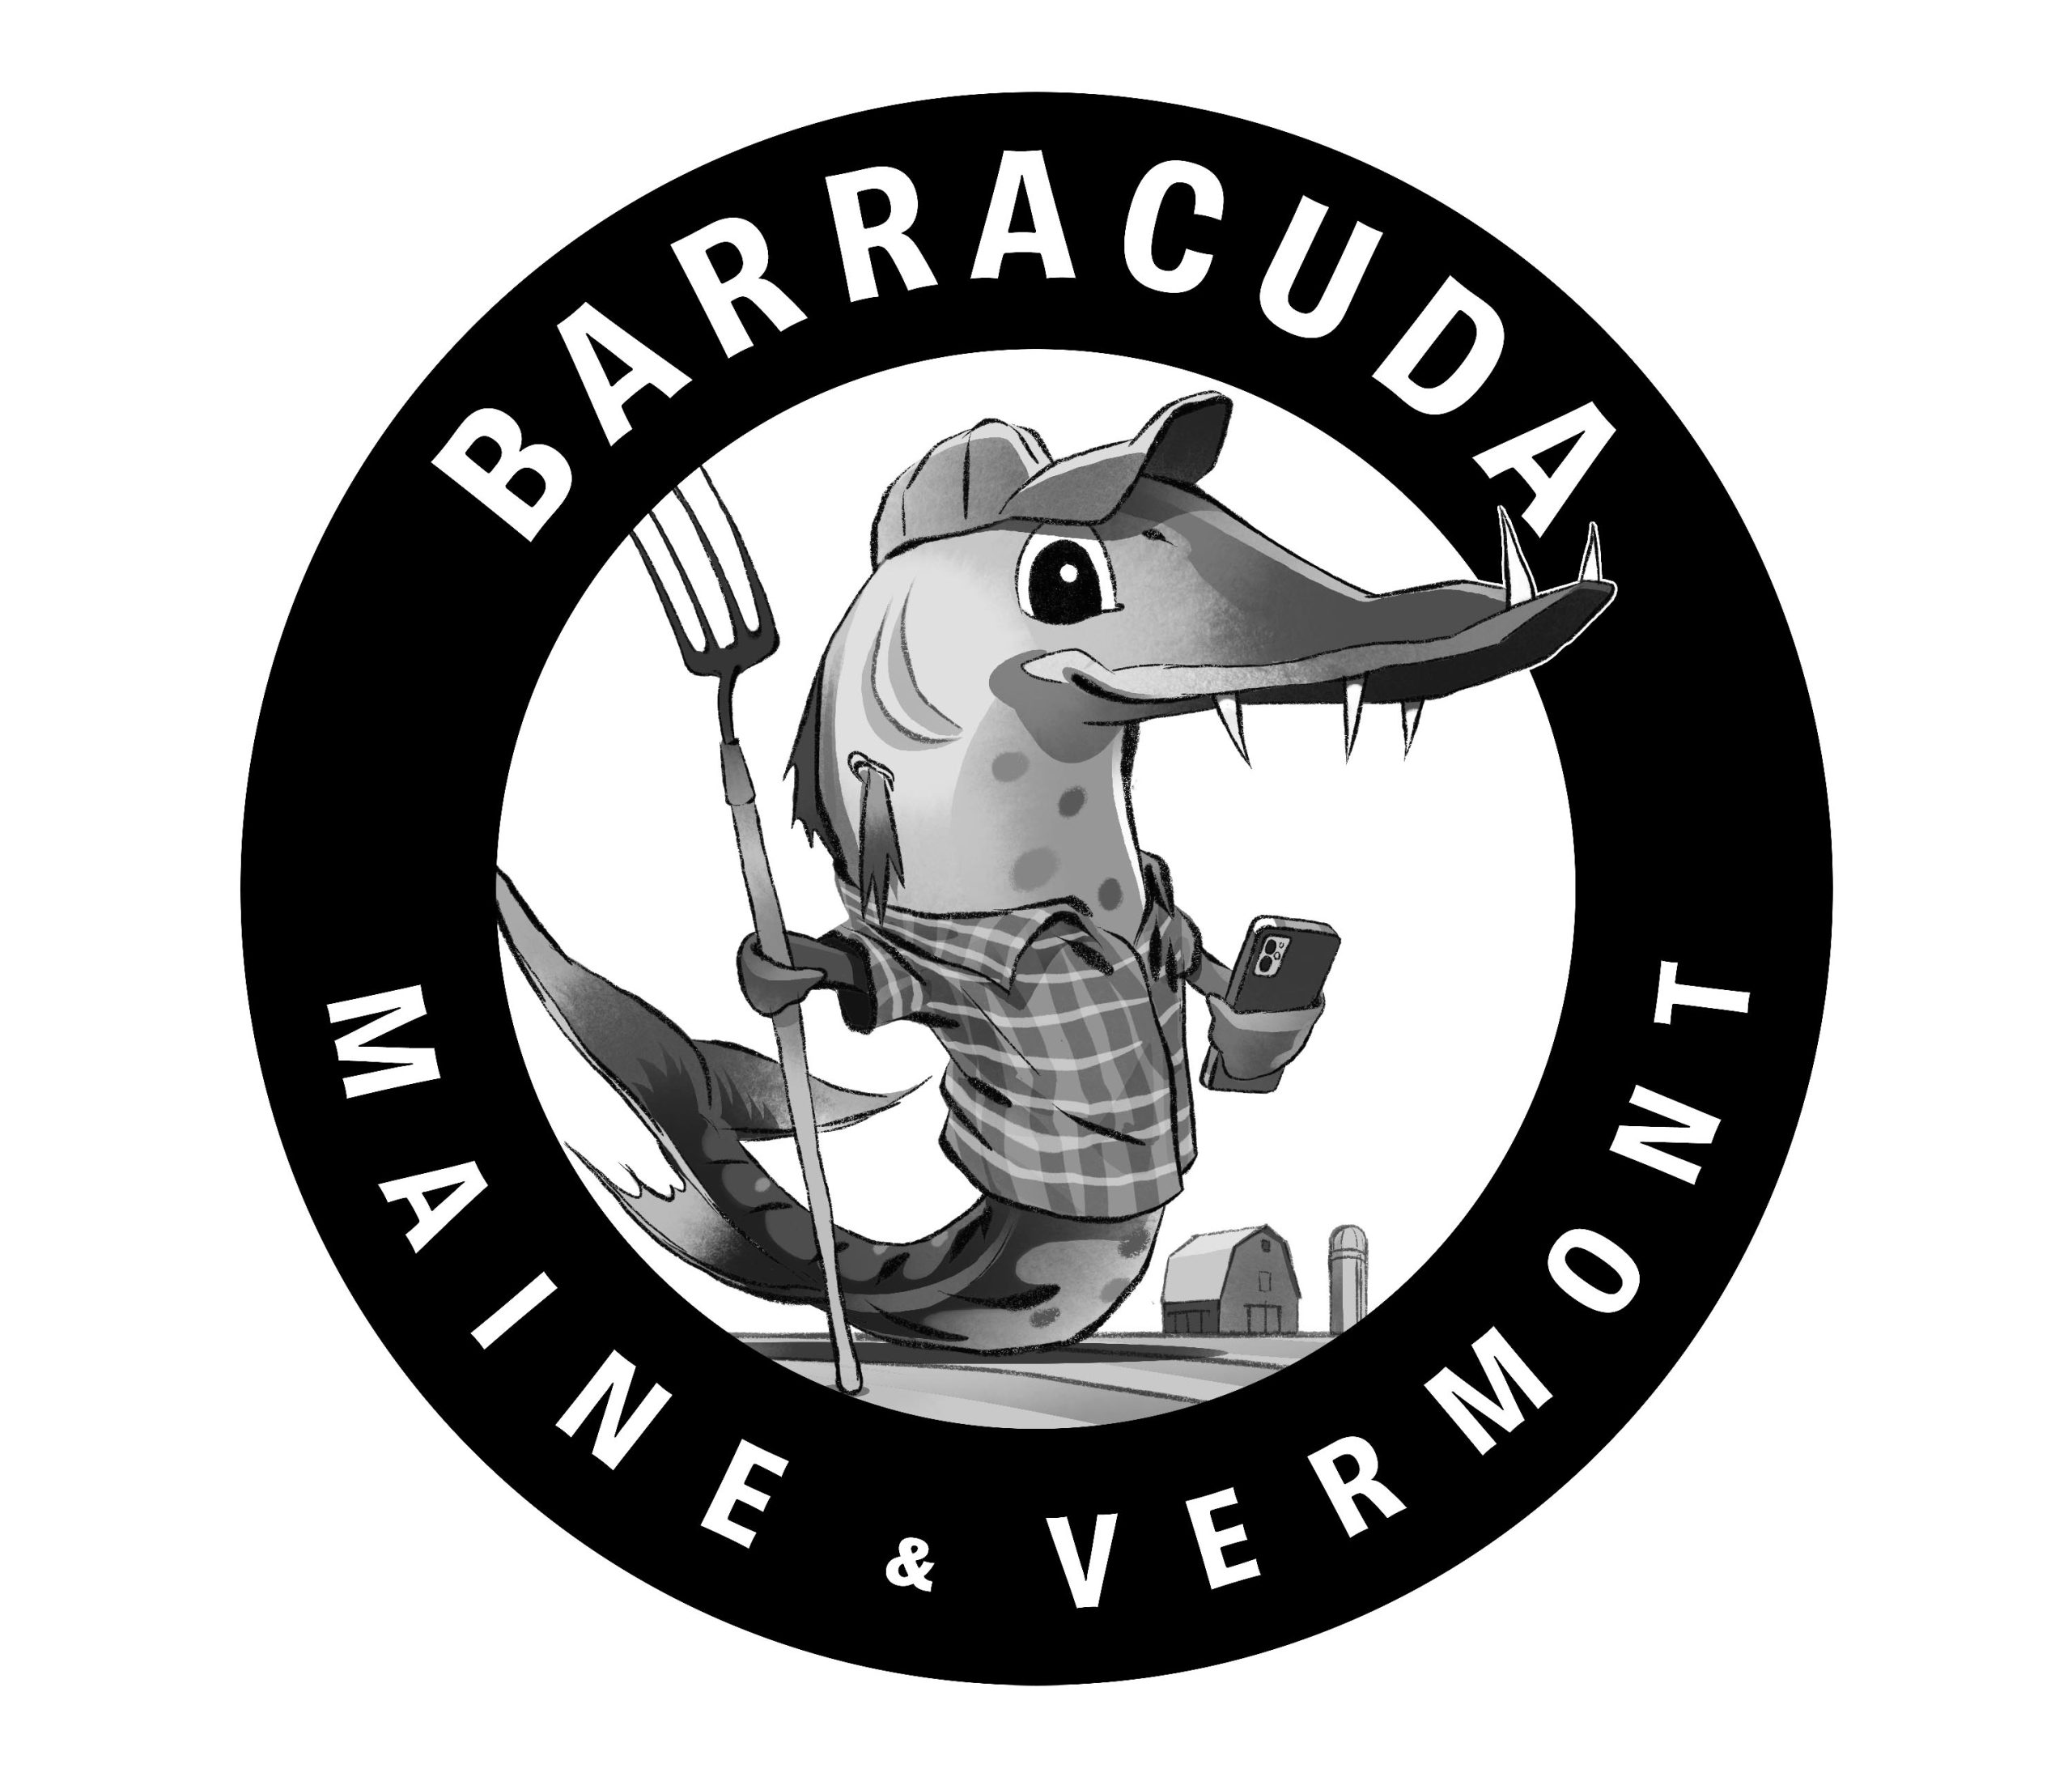 BARRACUDA Logo, reads Barracuda, Maine and Vermont.